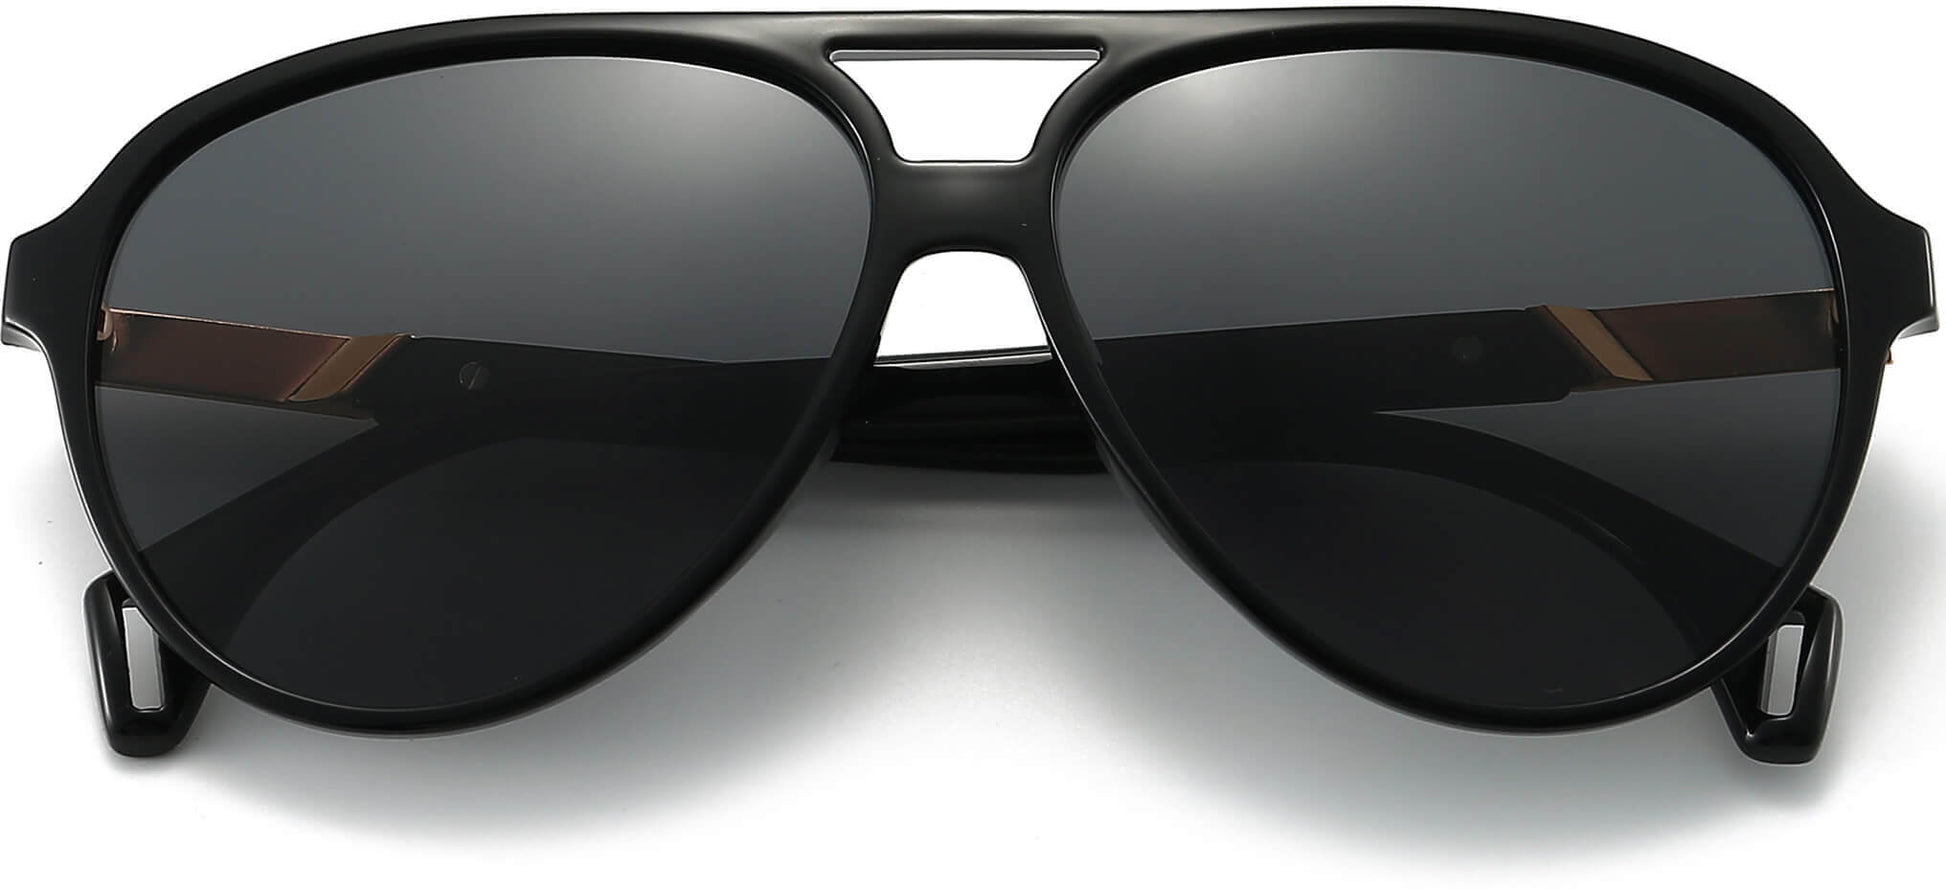 Lochlan Black TR90 Sunglasses from ANRRI